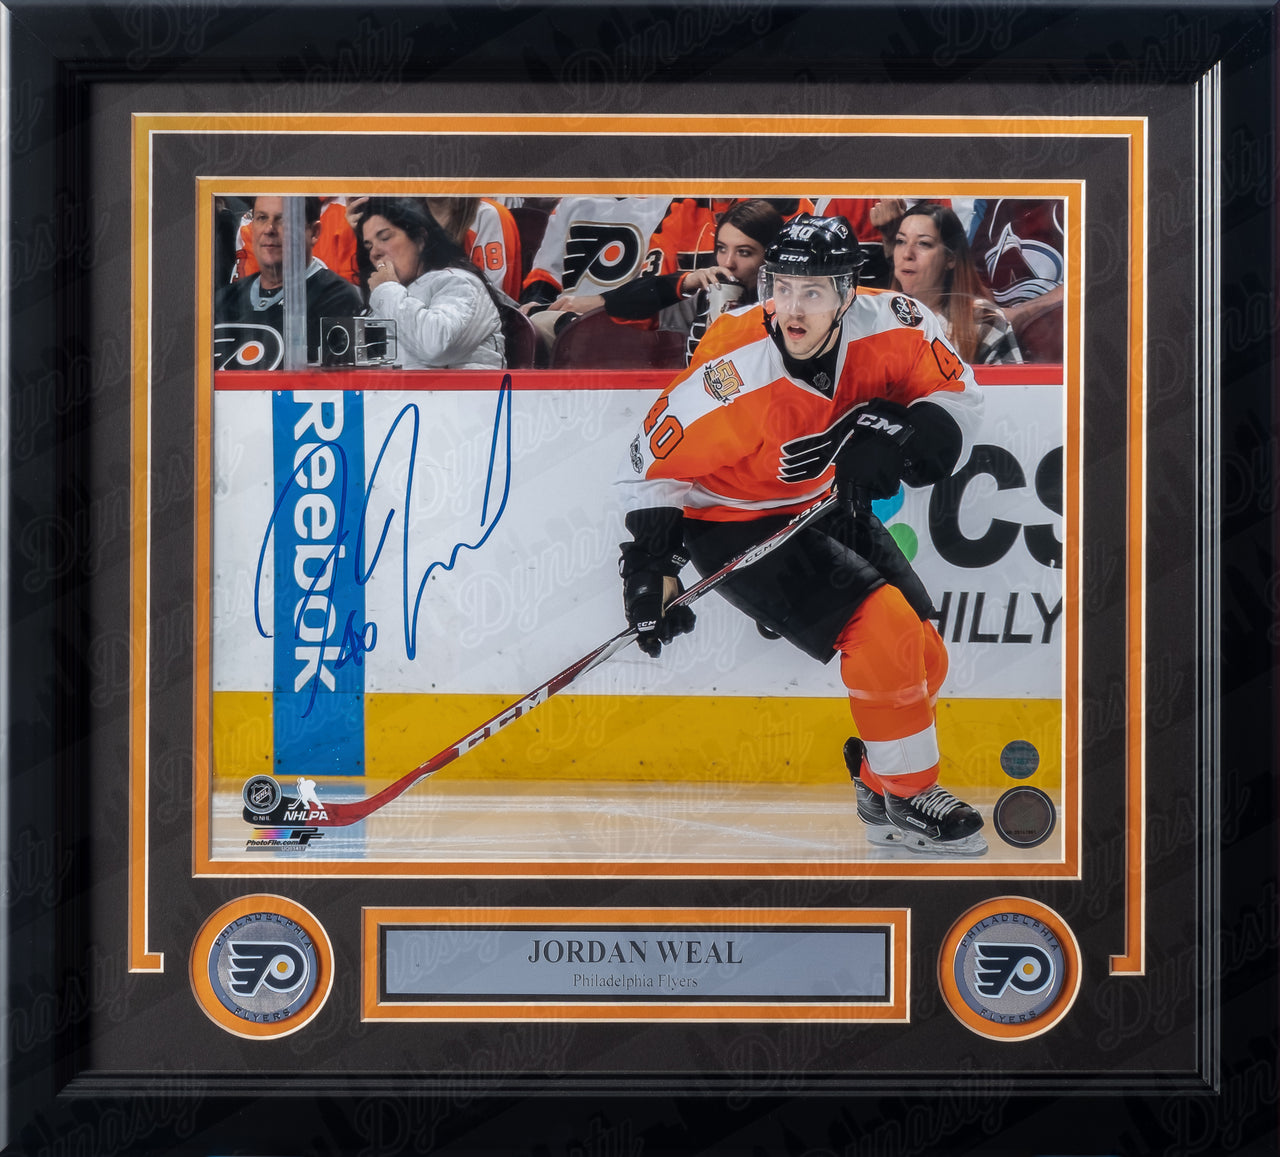 Jordan Weal in Action Autographed Philadelphia Flyers Framed Hockey Photo - Dynasty Sports & Framing 